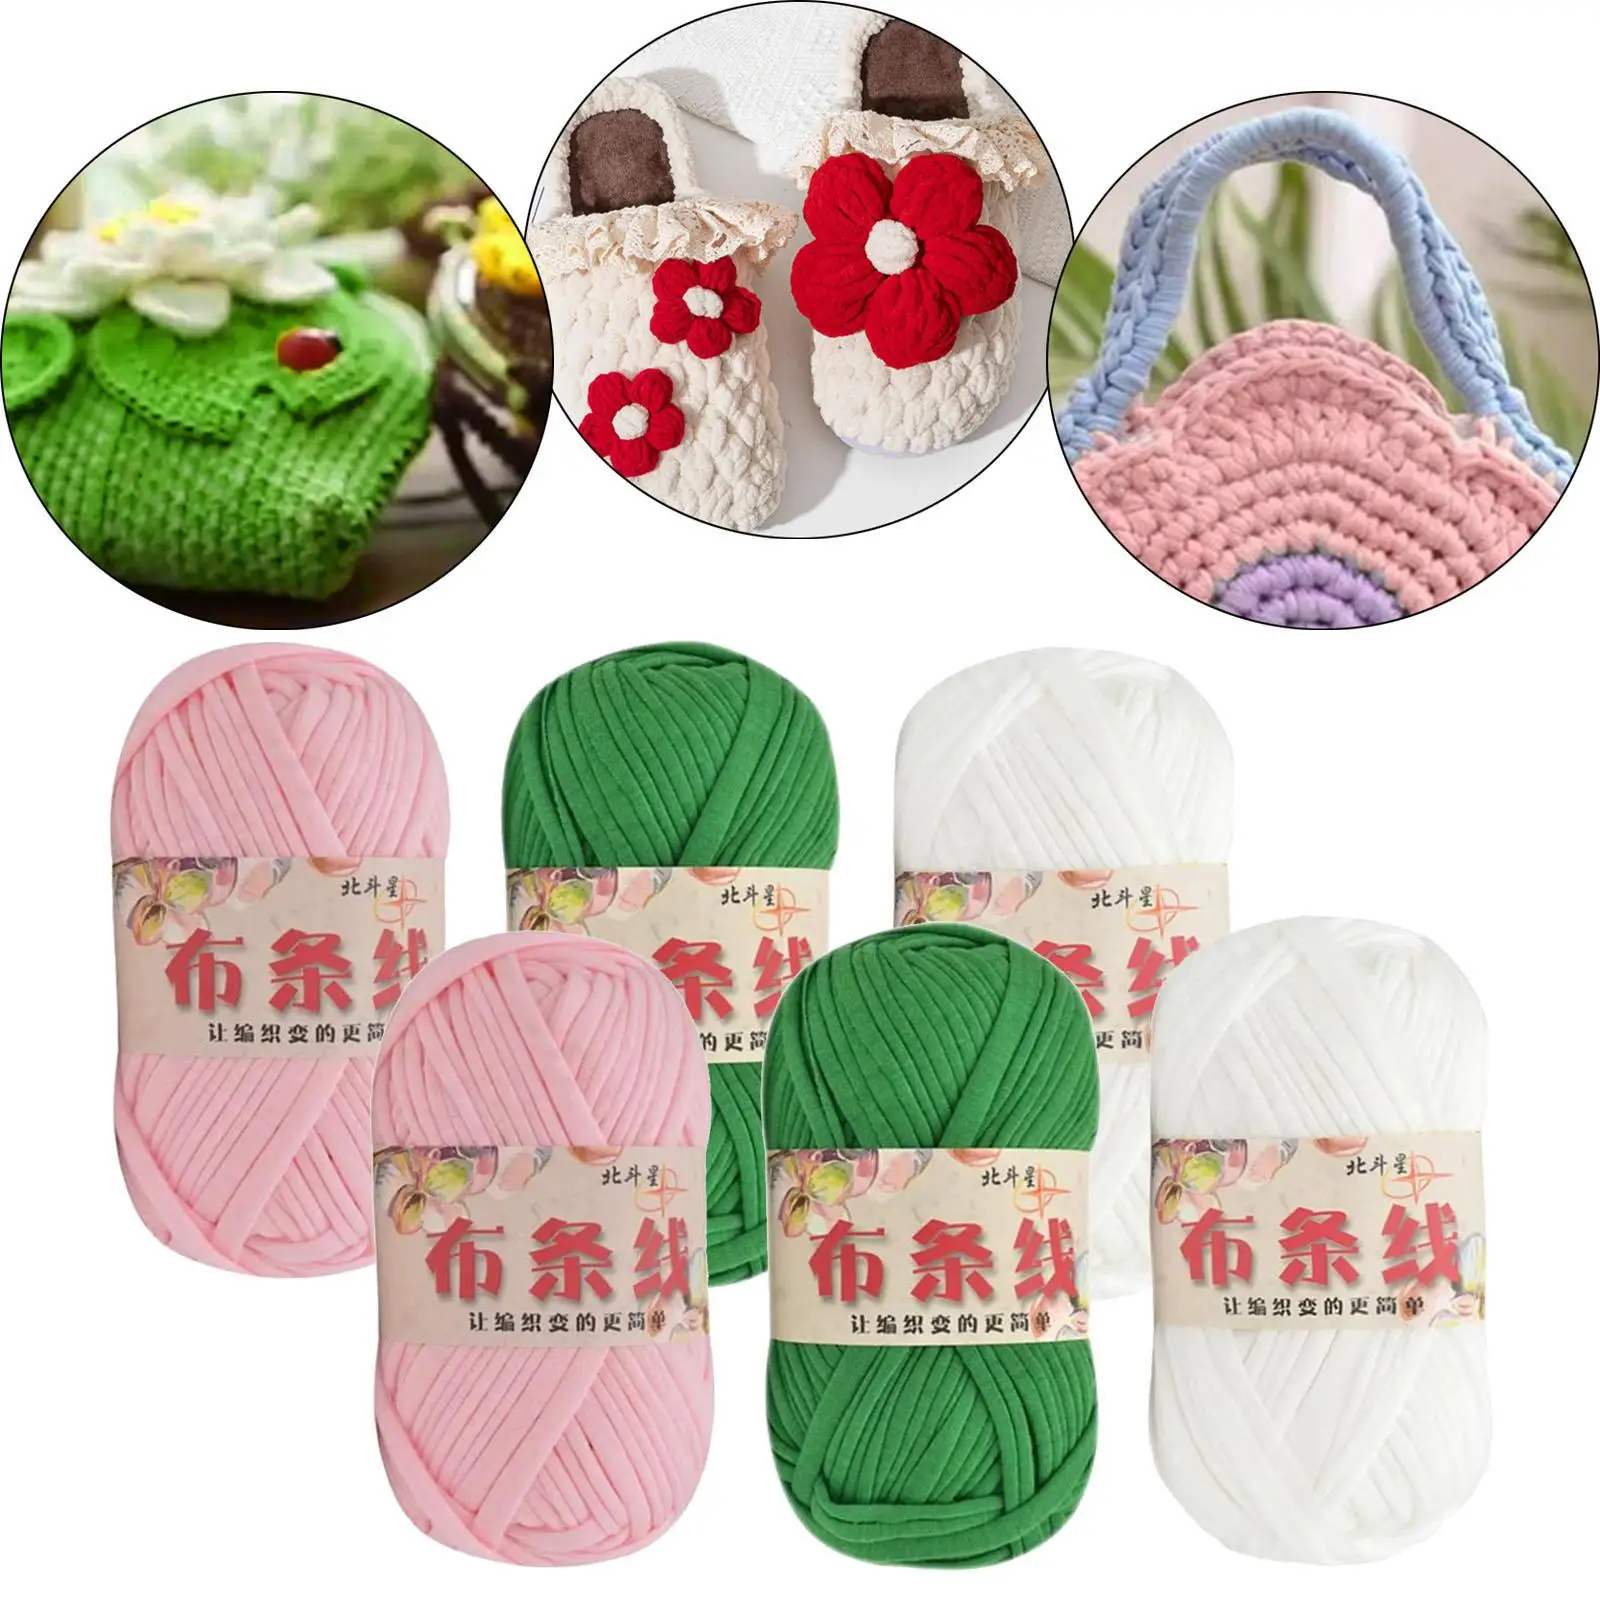 6x Knitting Yarn Set Arm Knitting Yarn Hand Knit Bulky Yarn Chunky Yarn for Baskets Doormat Rug Making Tapestry Kids Crafts